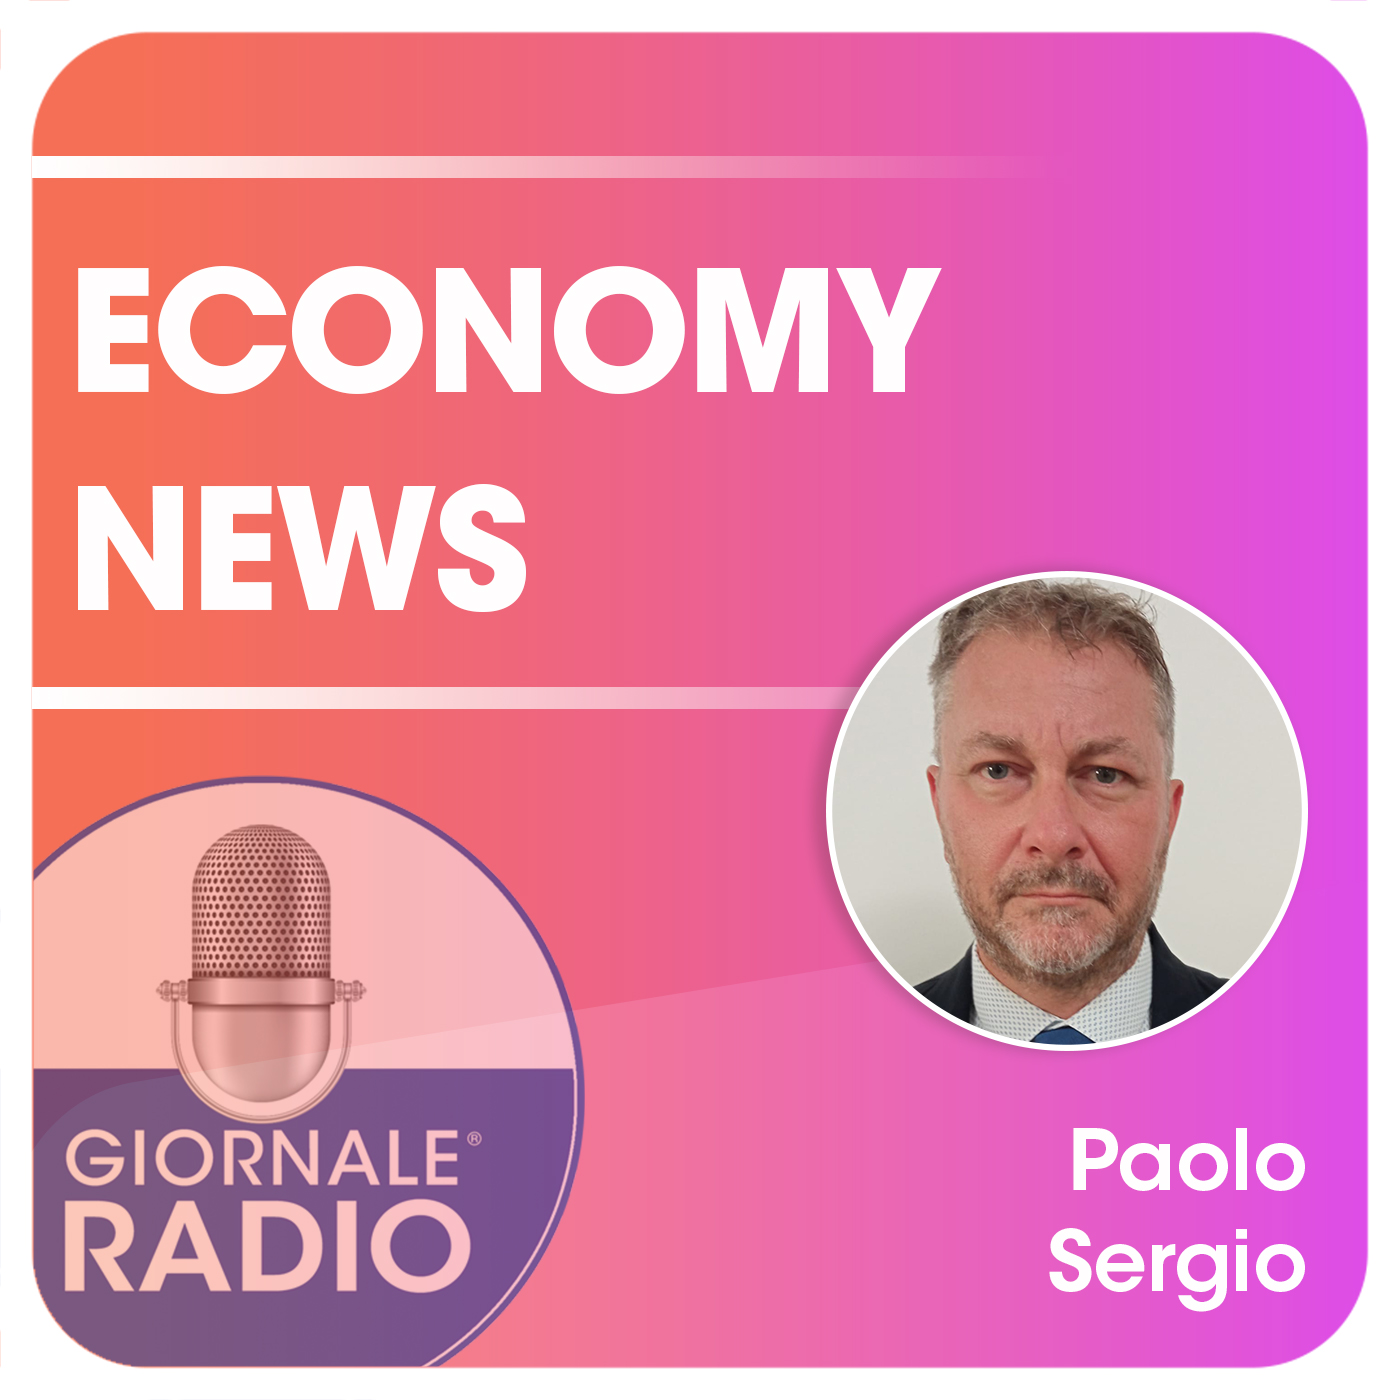 Economy News:Giornale Radio